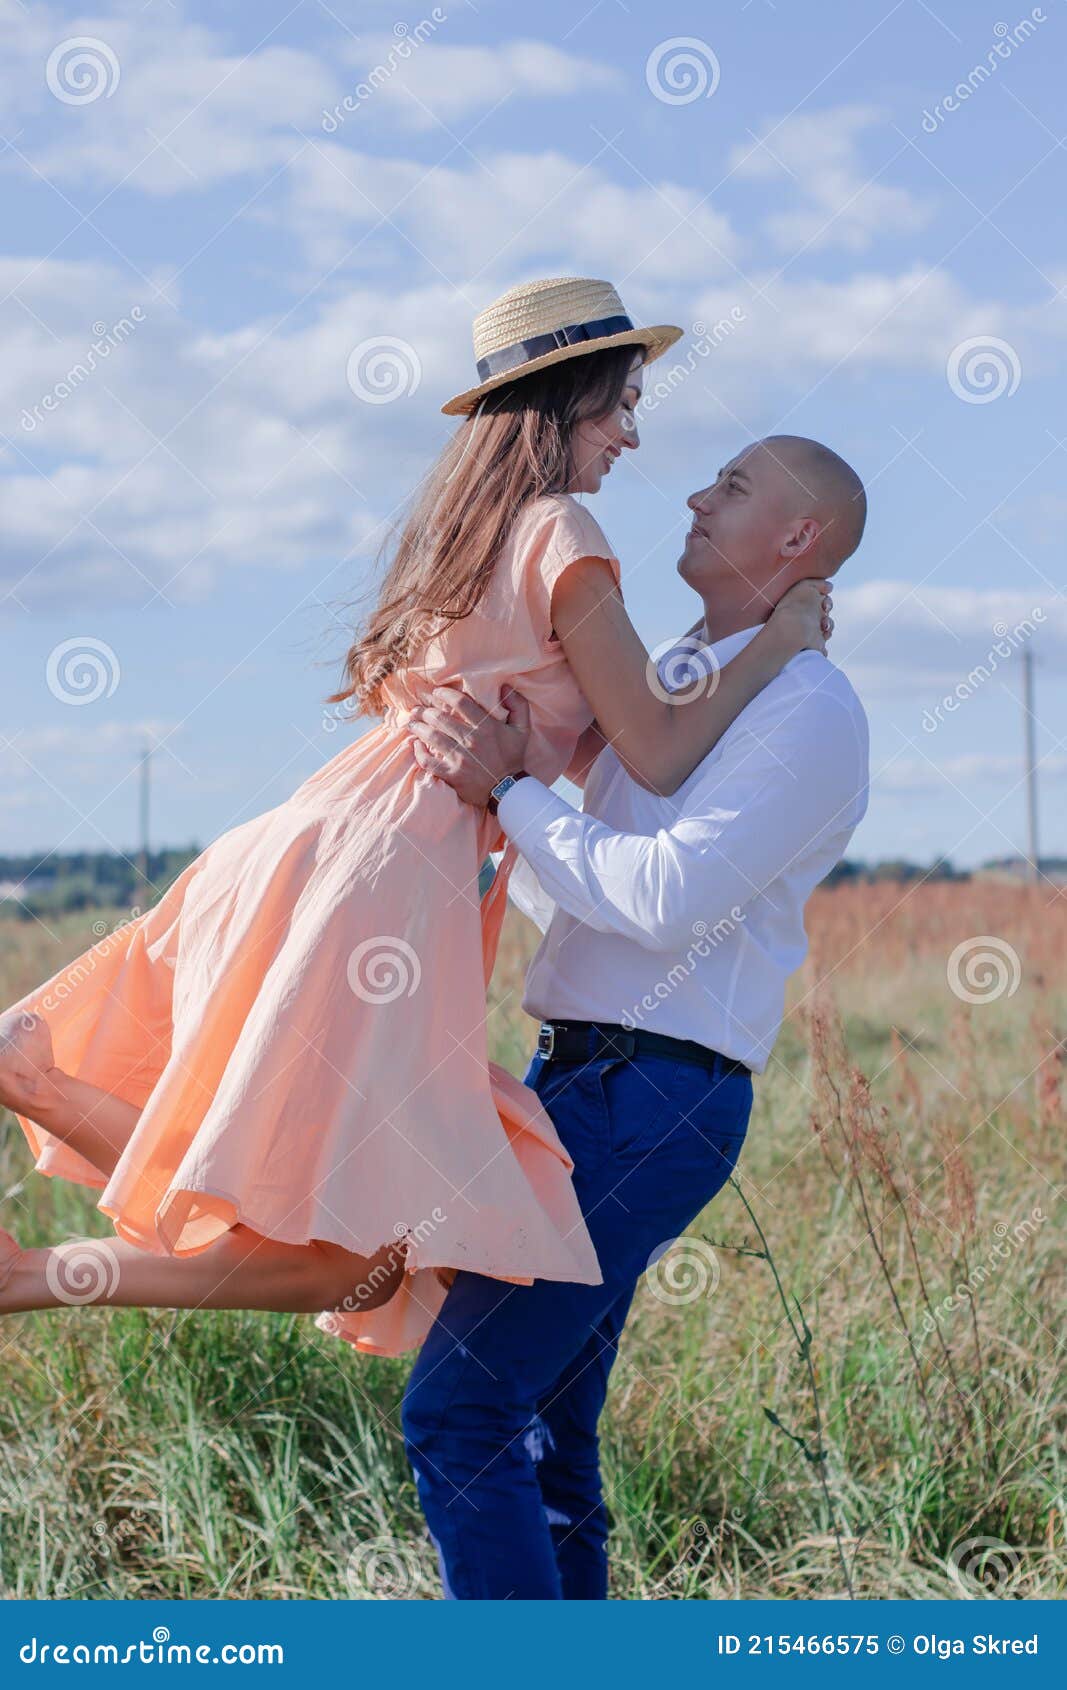 happy couple dancing field brunette cream dress bald men white shirt blue pants husband wife 215466575